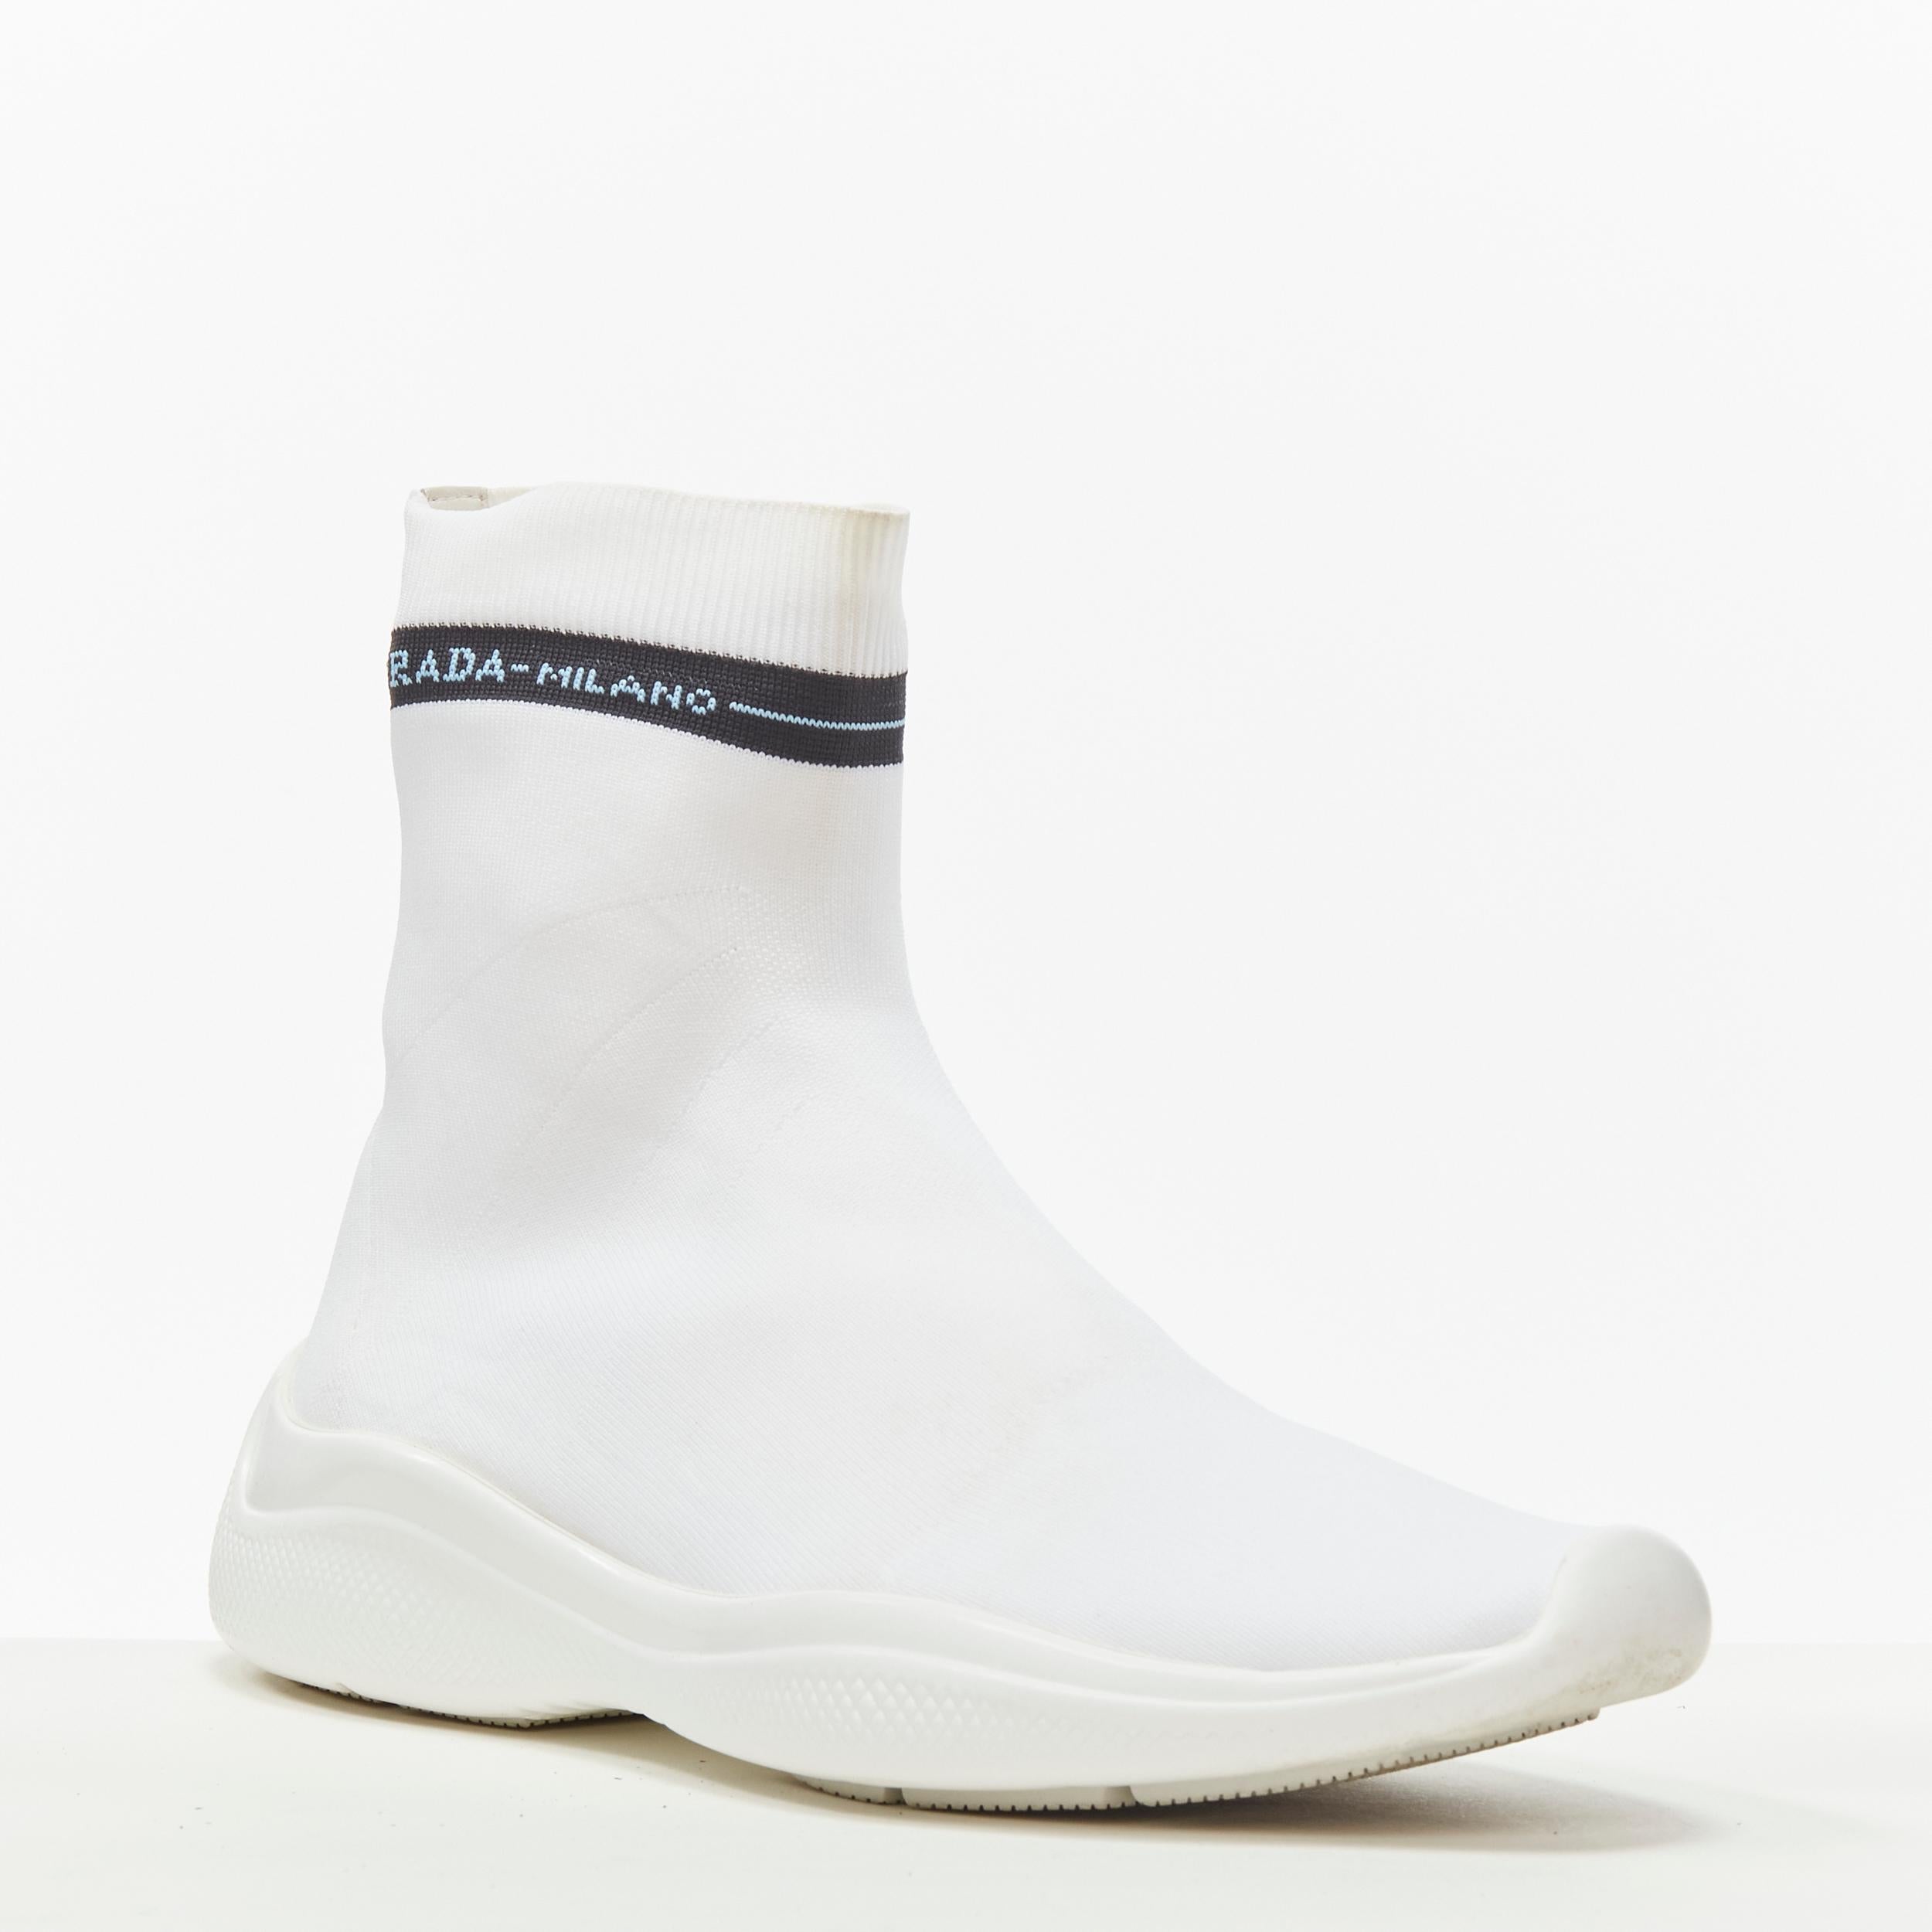 PRADA Milano schwarzes Logo Band weiße Socke stricken hohe Top-Sneaker EU35.5 (Grau) im Angebot